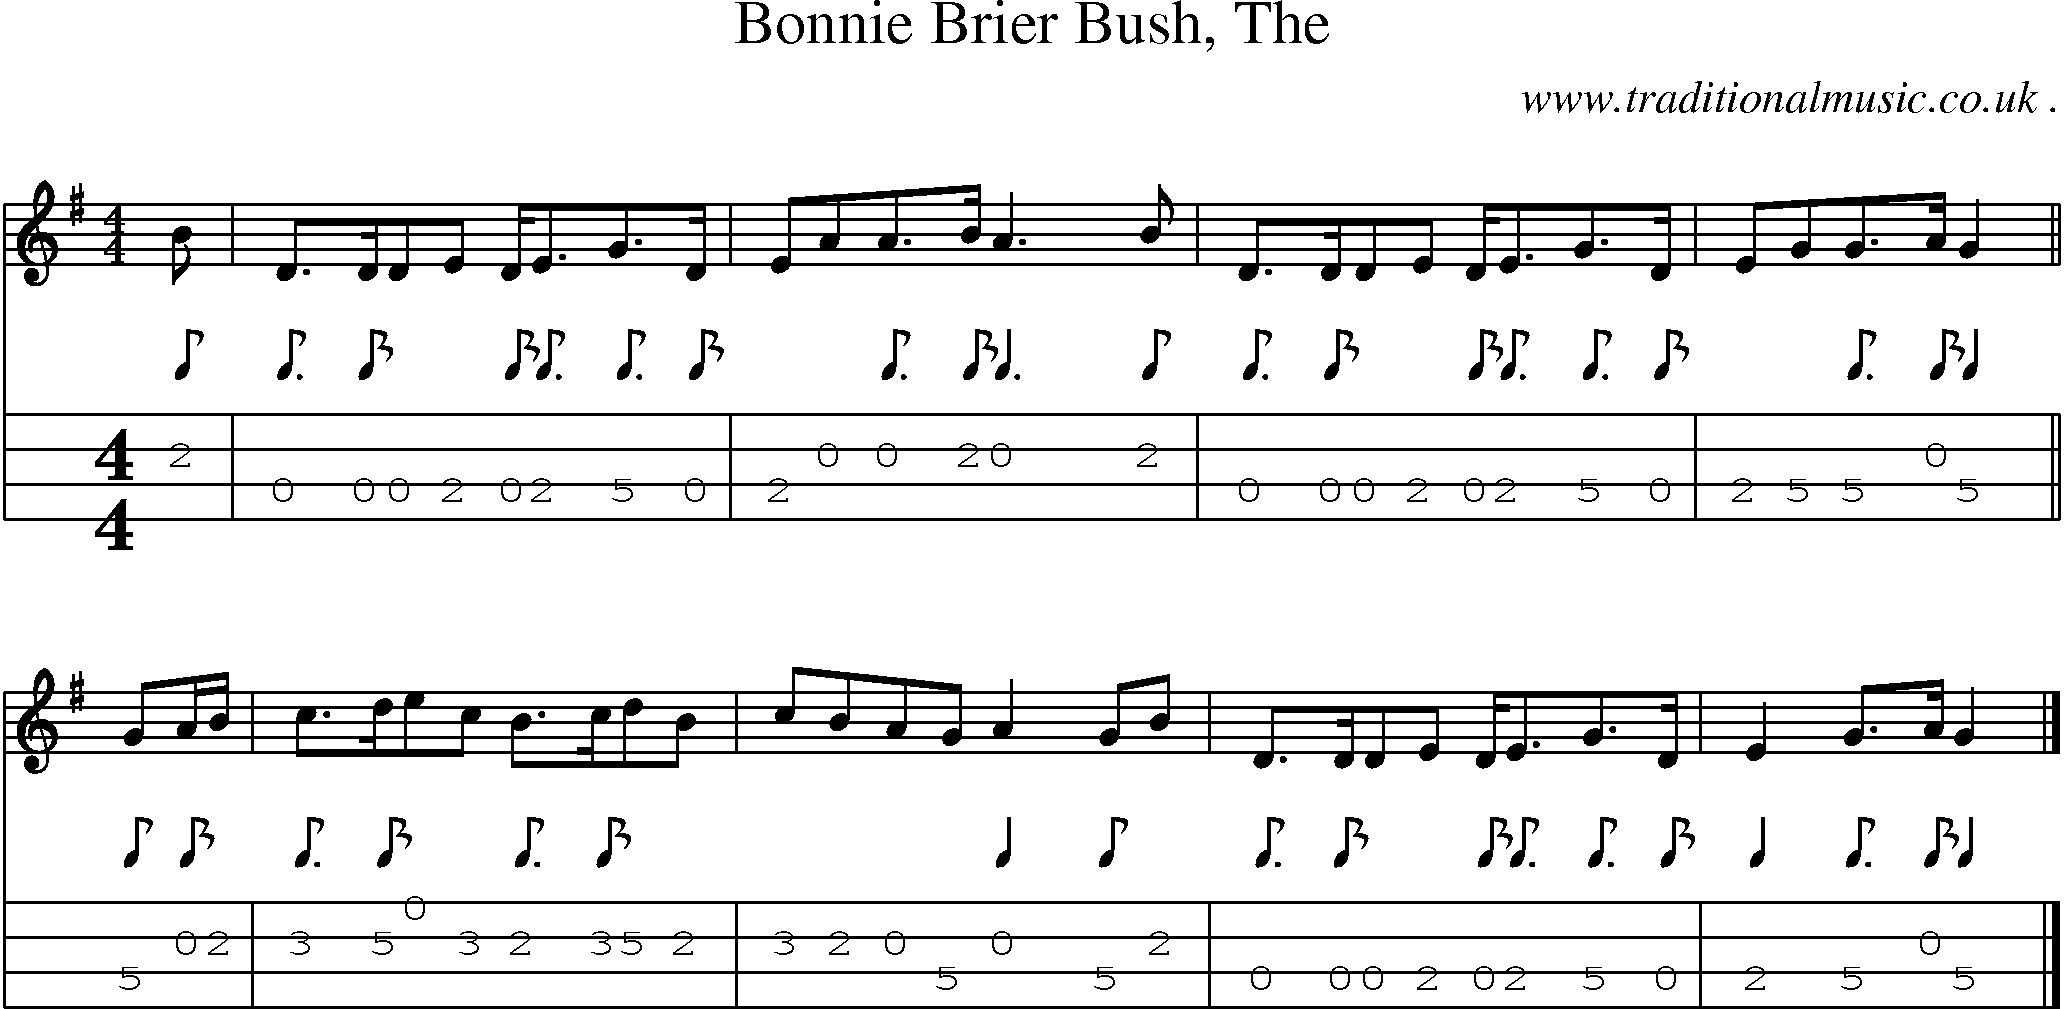 Sheet-music  score, Chords and Mandolin Tabs for Bonnie Brier Bush The